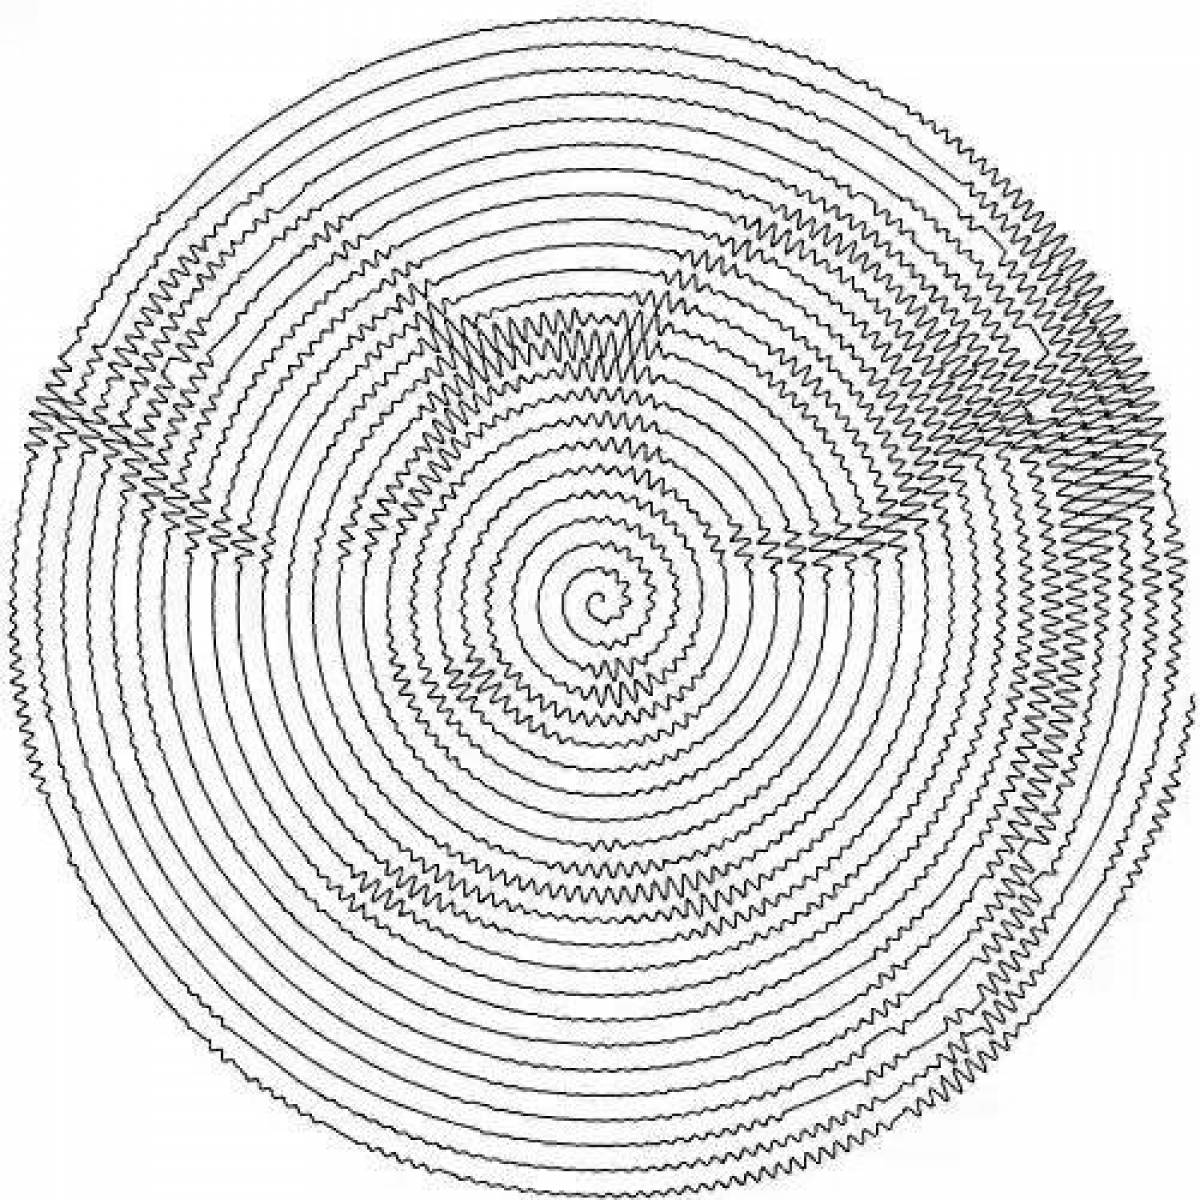 Coloring dreamy circular spiral